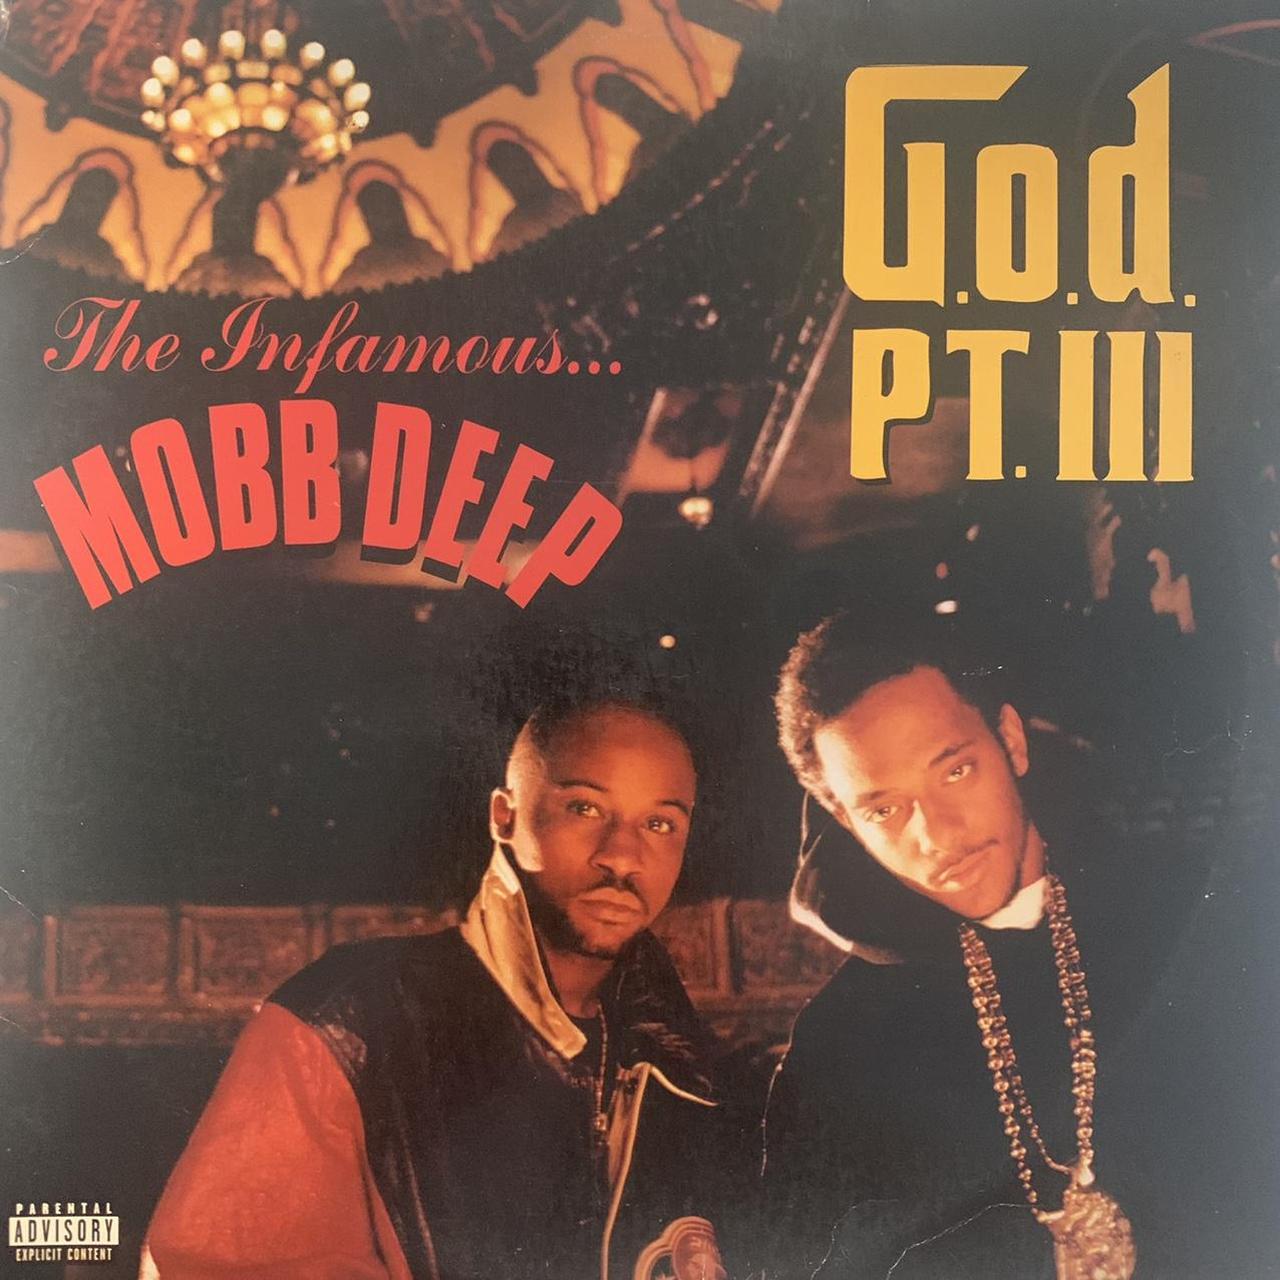 Mobb Deep “GOD PT III” / “The After Hours GOD PT III” 2 Track 12inch Vinyl